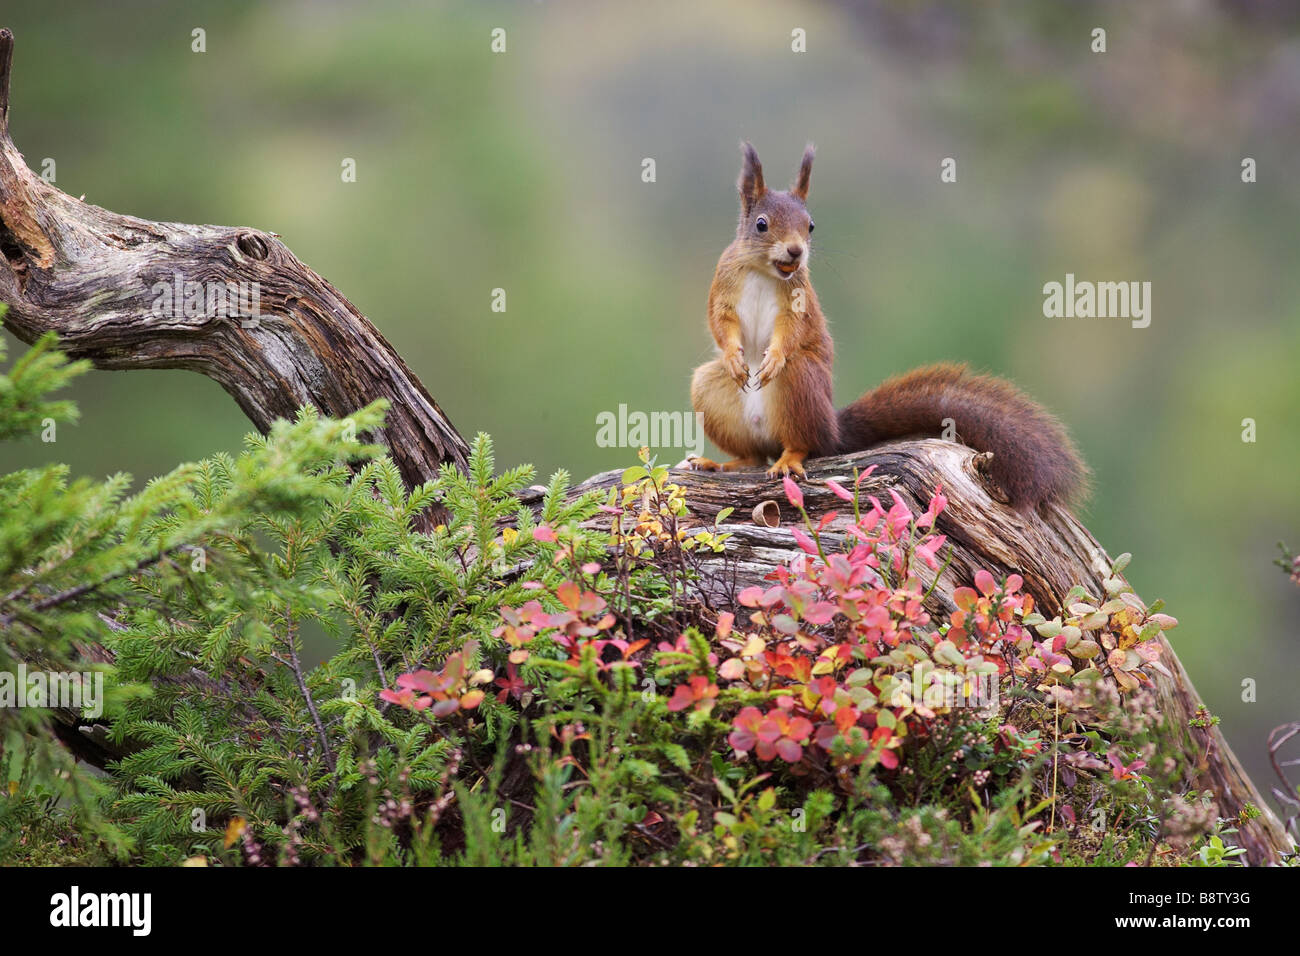 Red Squirrel (Sciurus vulgaris) on fallen log in autumnal pine forest Stock Photo